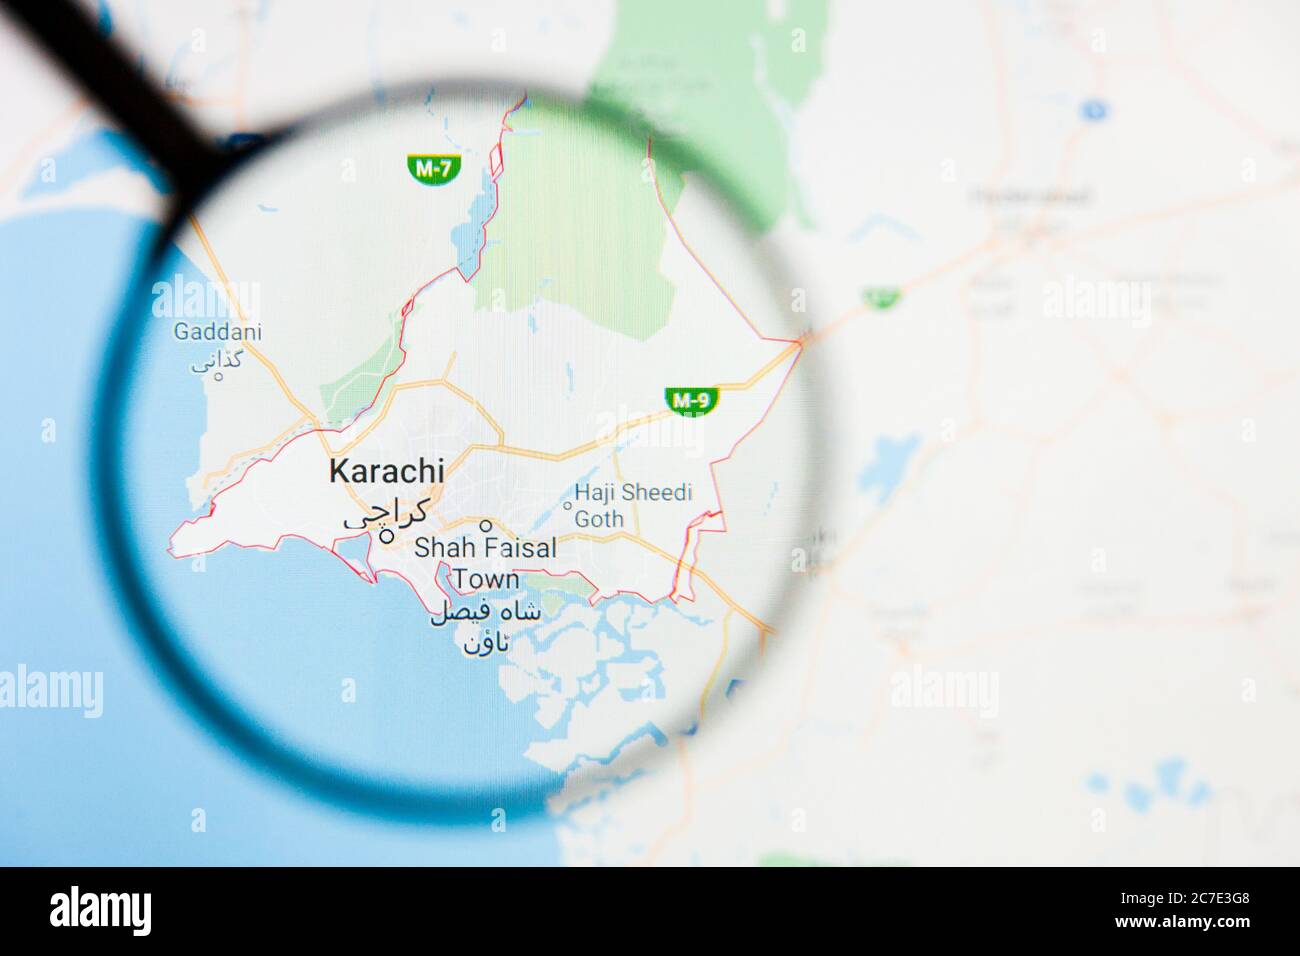 Karachi, Pakistan city visualization illustrative concept on display screen through magnifying glass Stock Photo